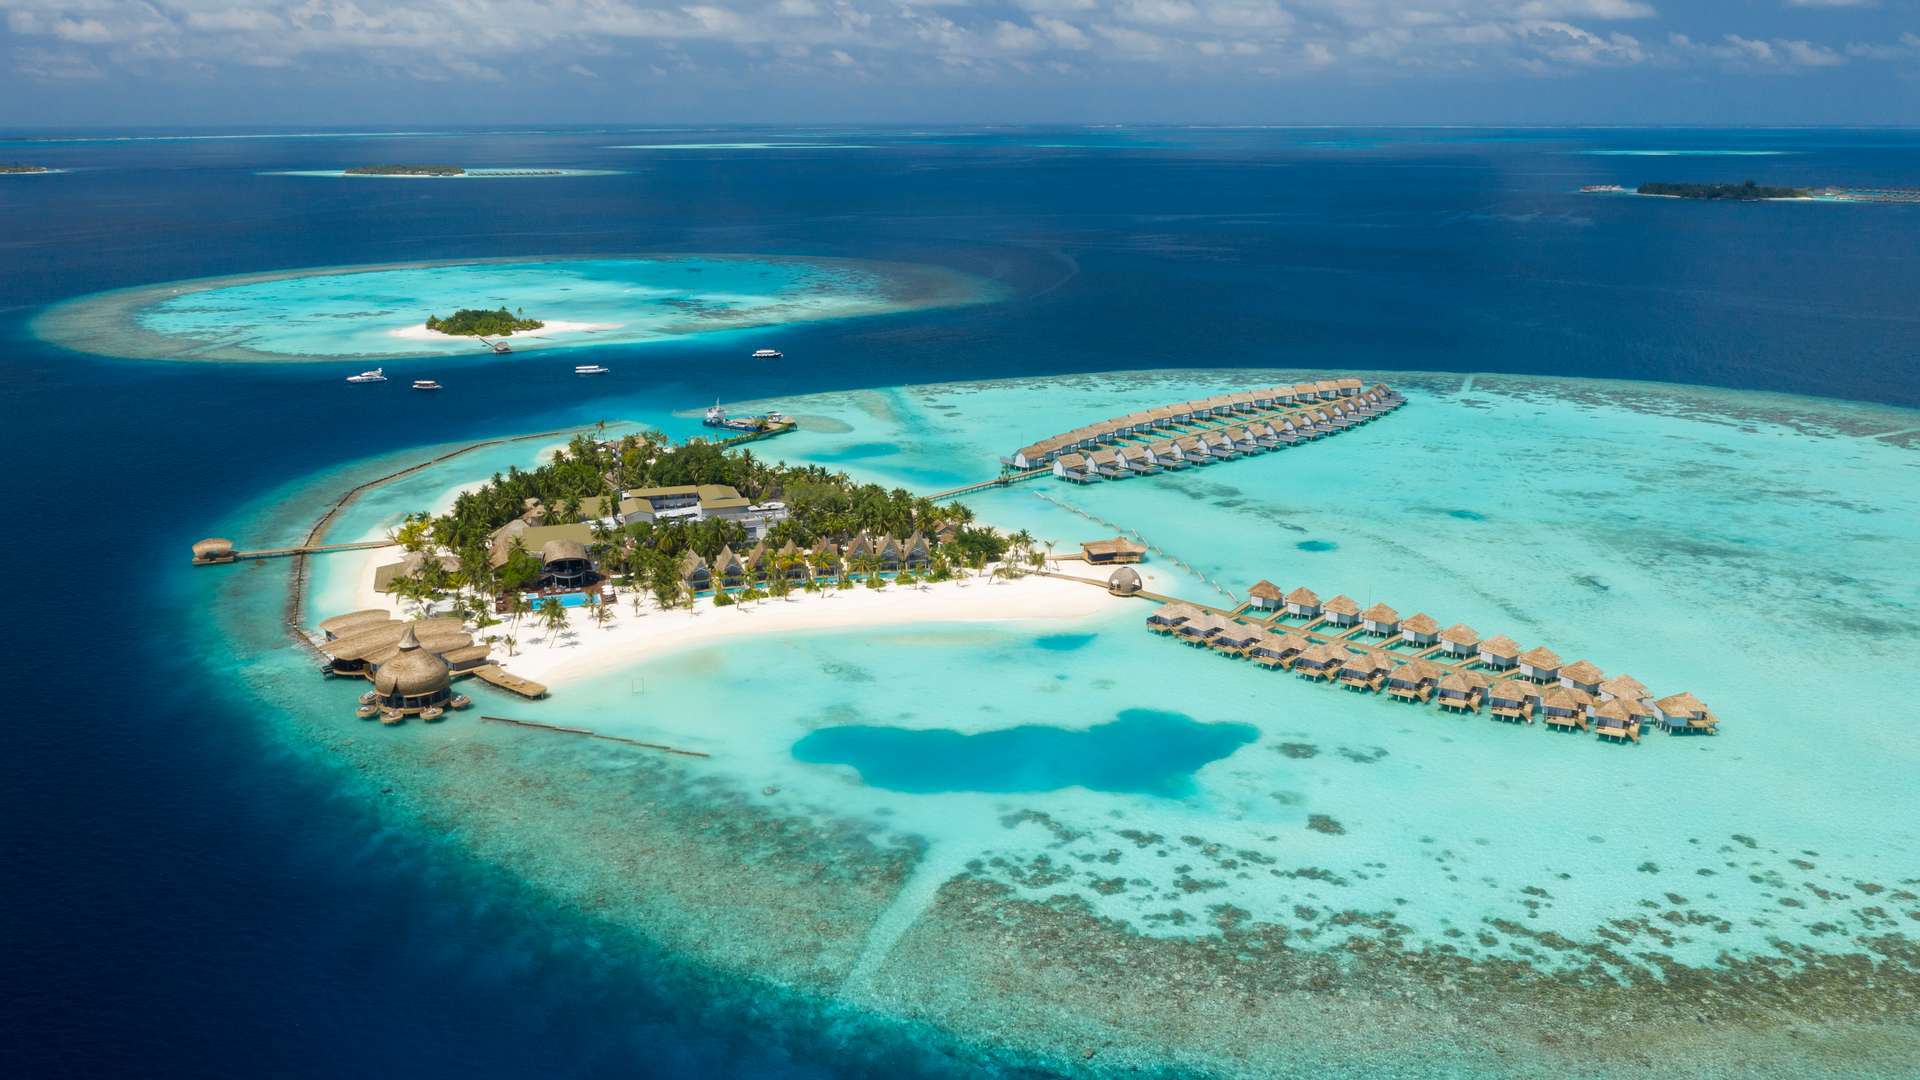 A Maldives Island Panoramic View